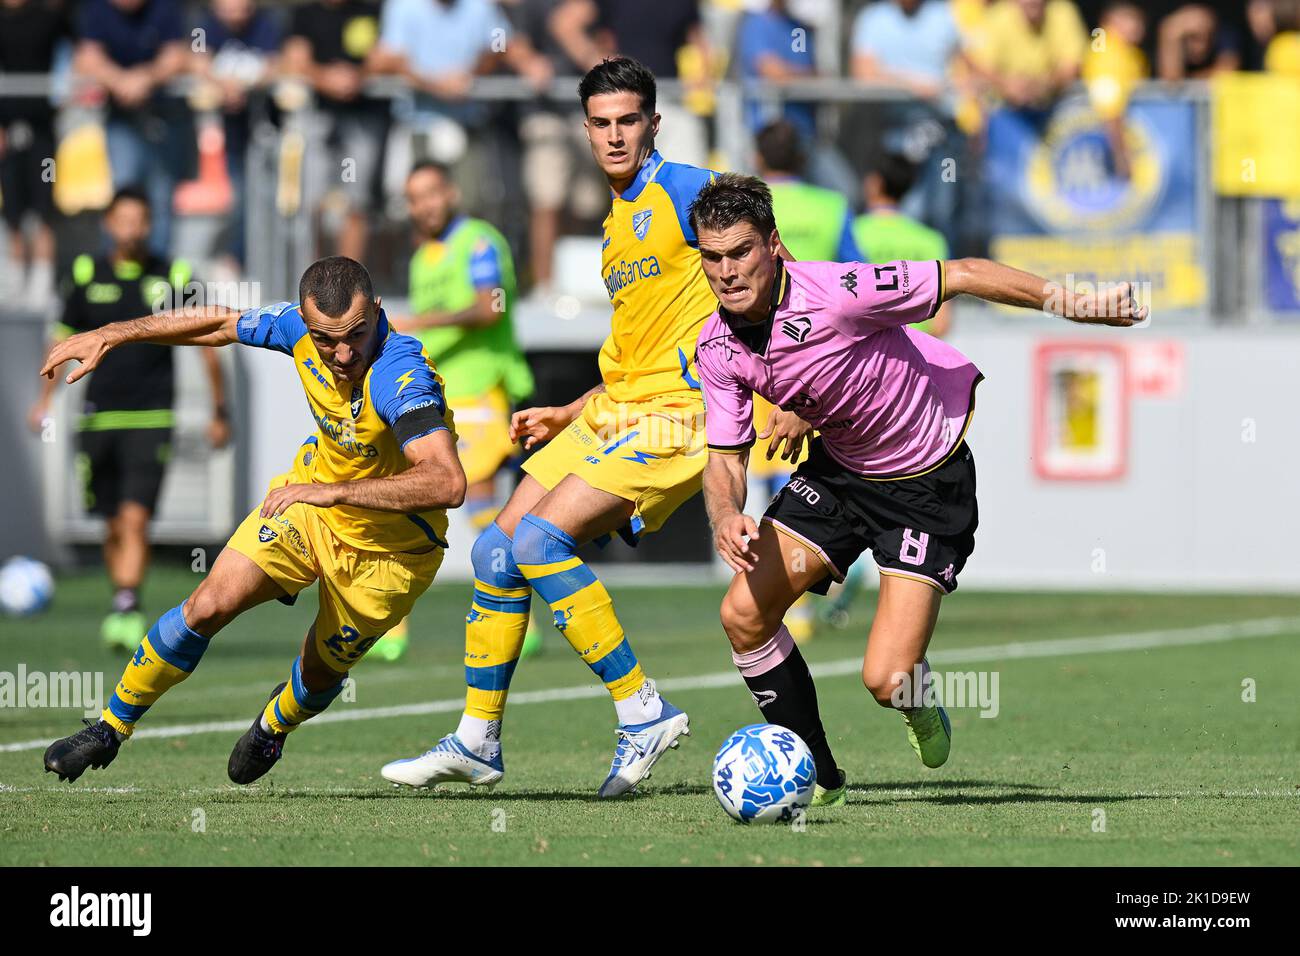 Football Italia on X: #SerieB : #Palermo and #Bari soar, #Parma #Empoli  and #Frosinone stall   / X